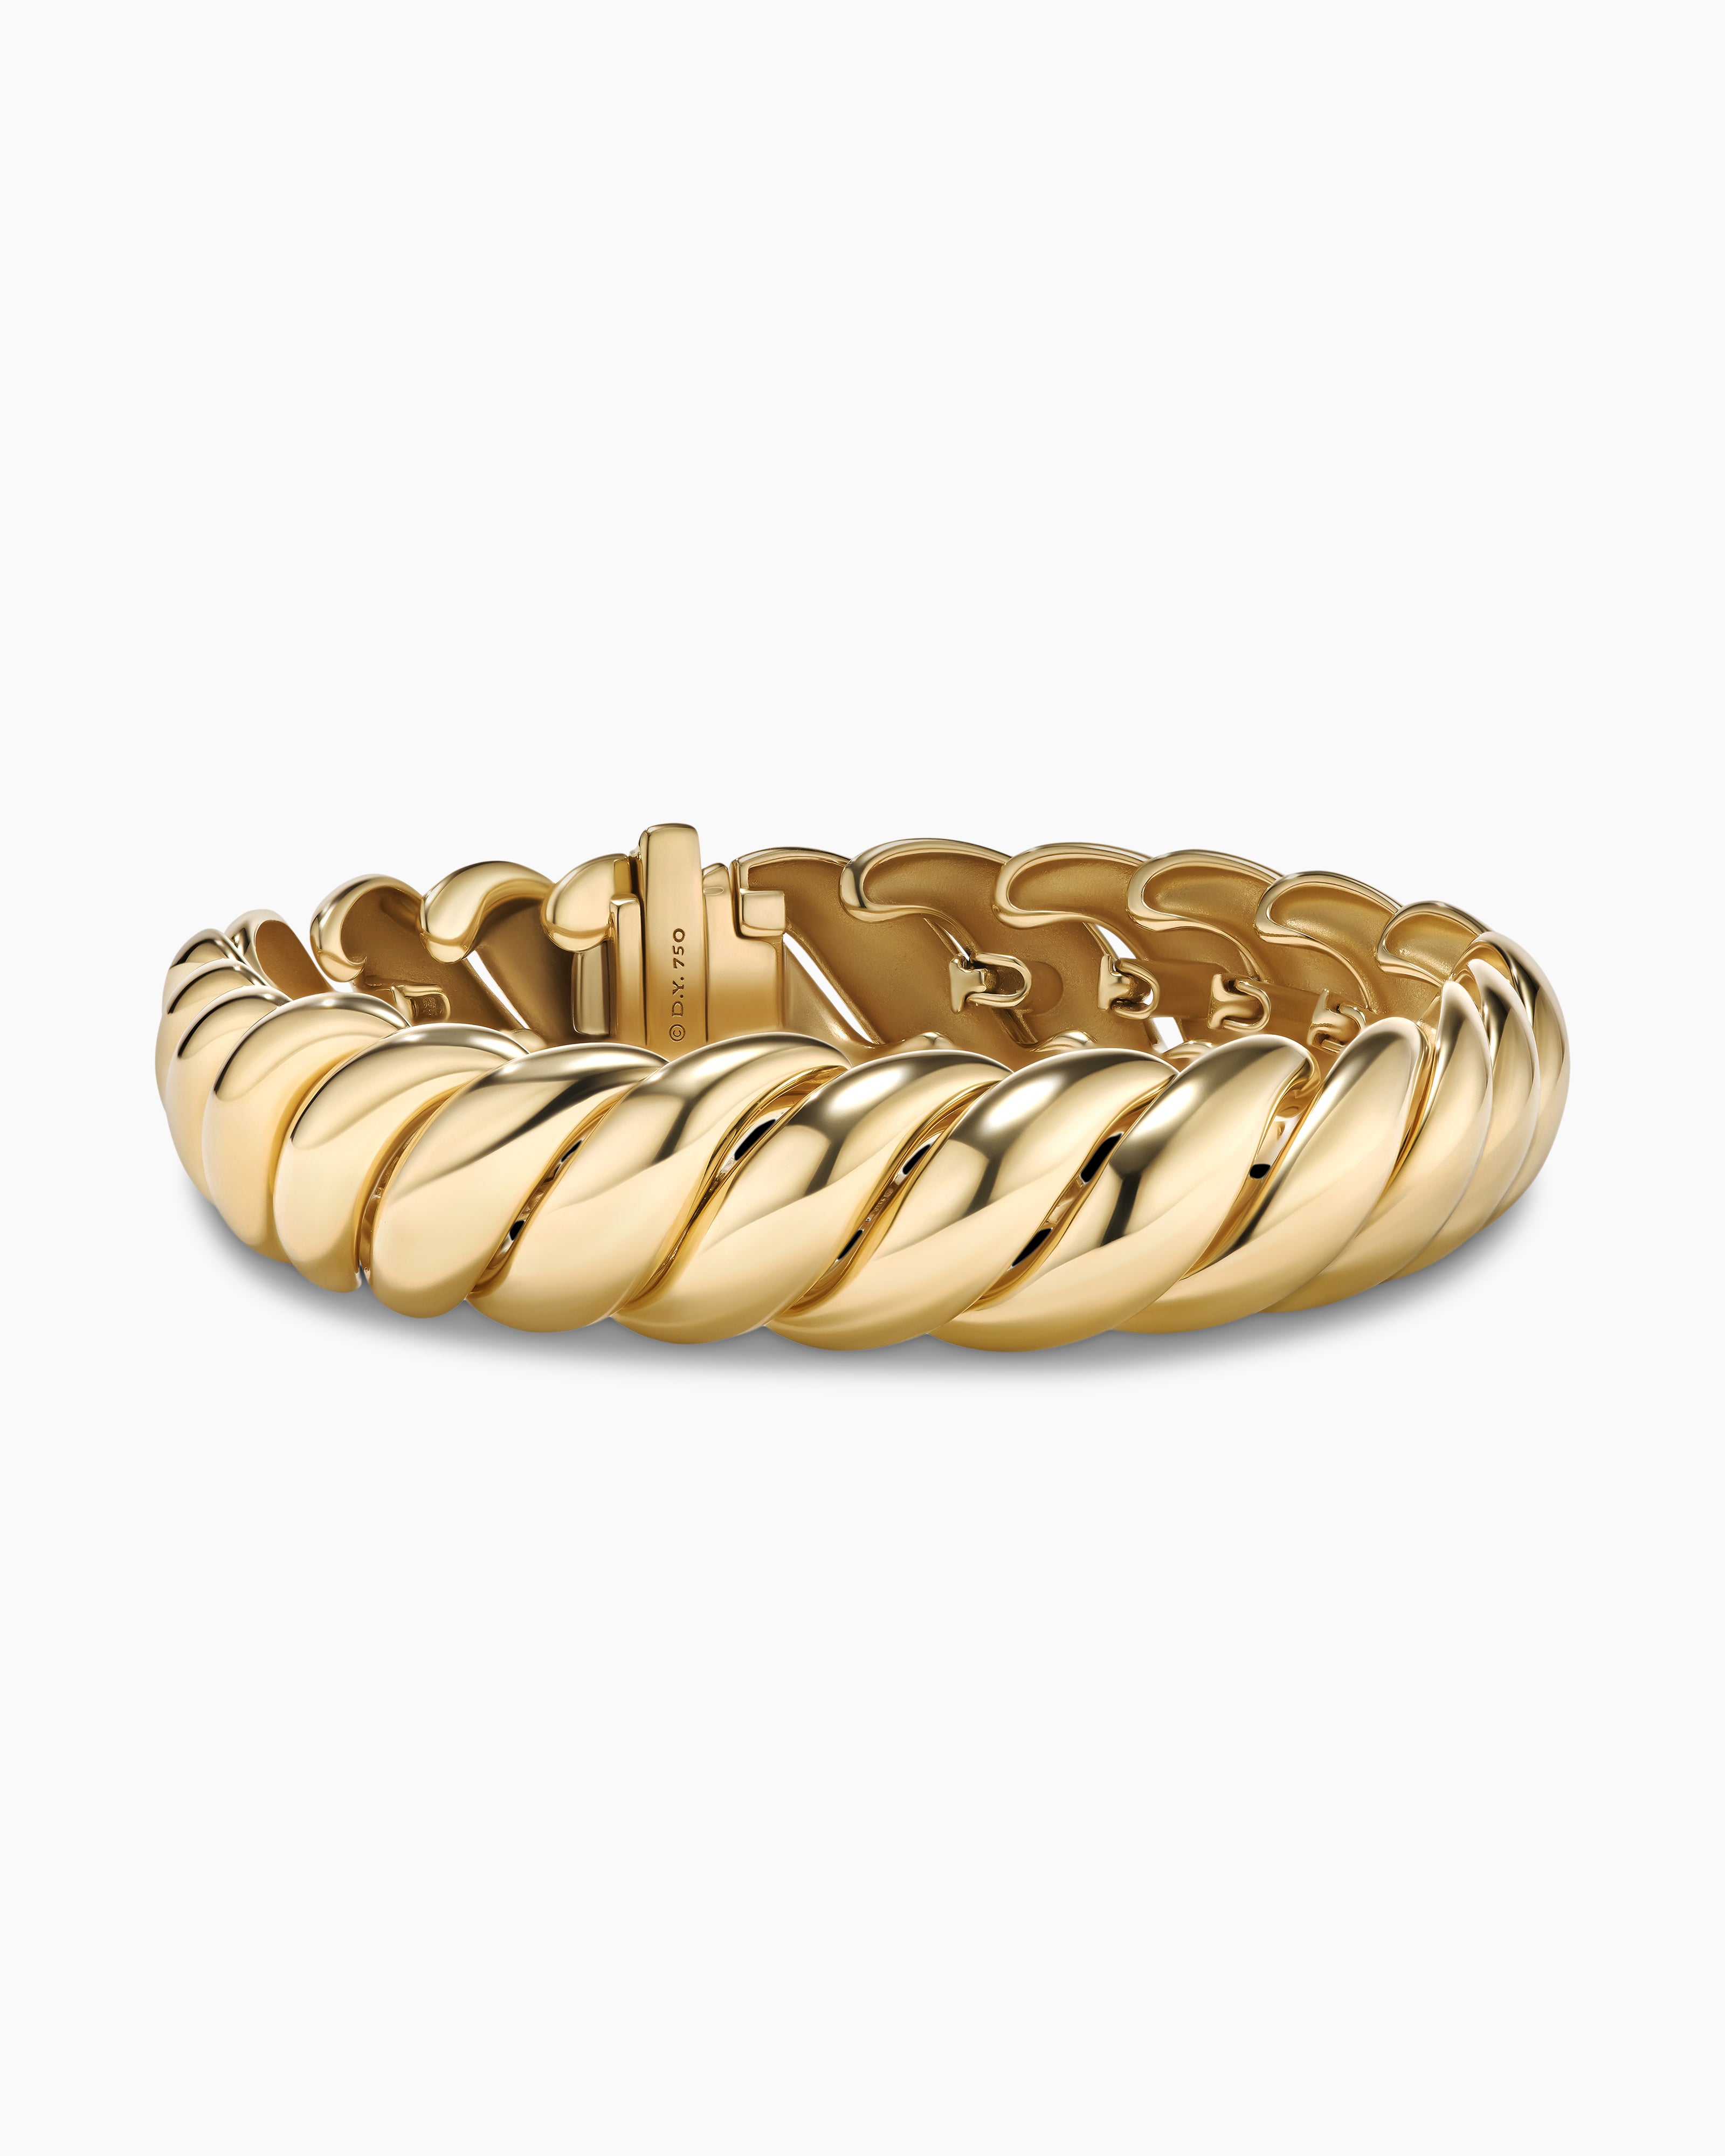 David Yurman Cablespira Bracelet in 18K Rose Gold Women's Size Small